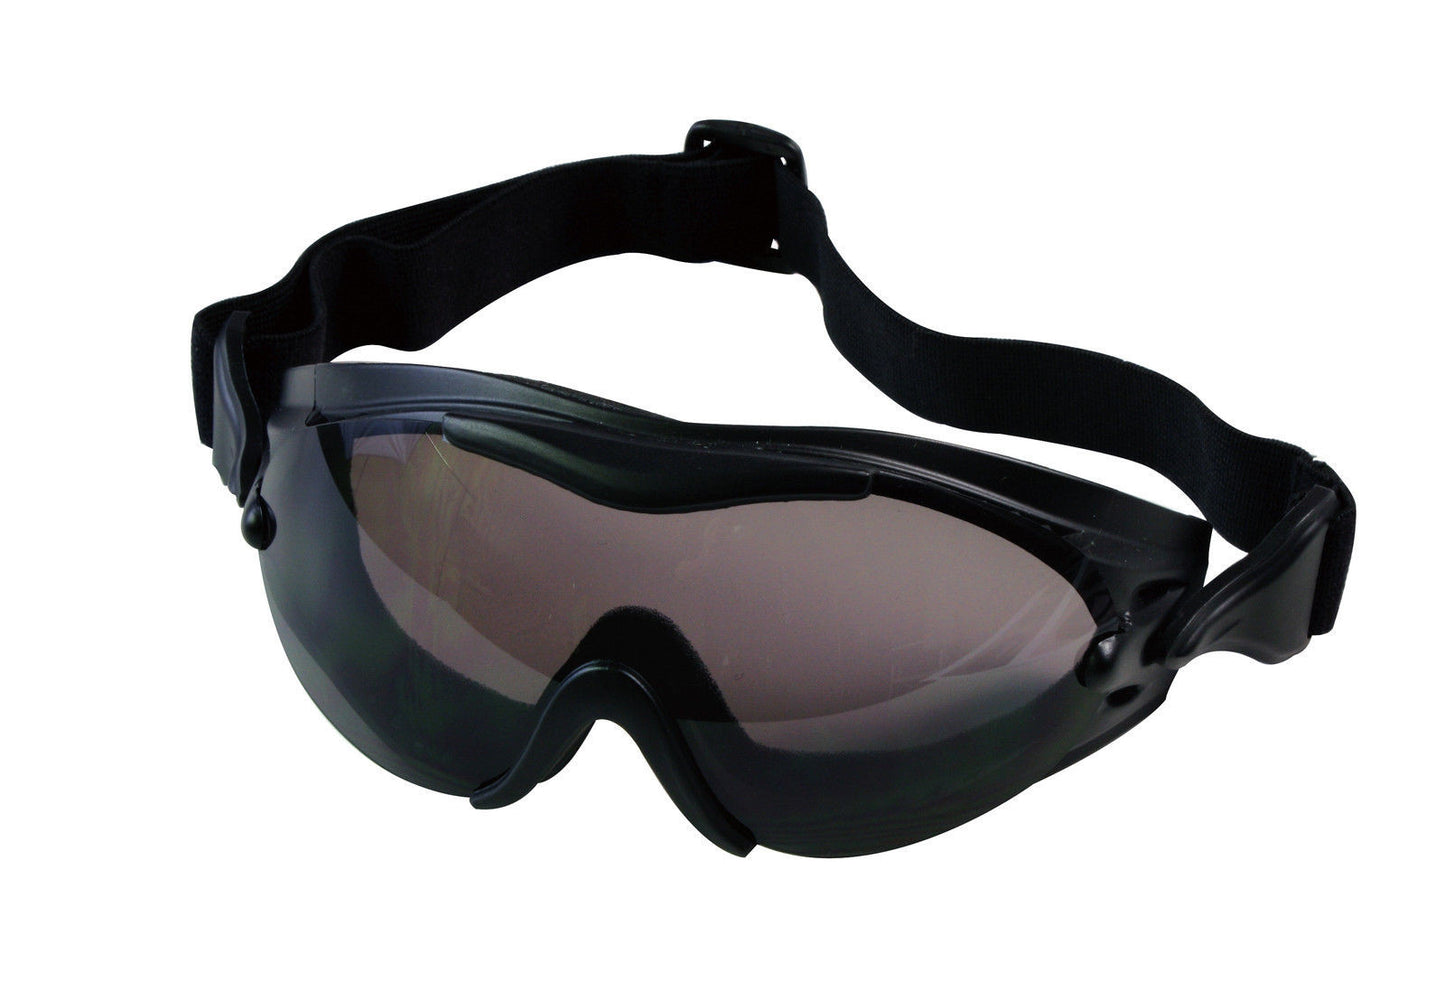 Swattec Tactical Goggle - Anti-Fog Anti-Scratch Grey Lenses - Field / Snow Gear